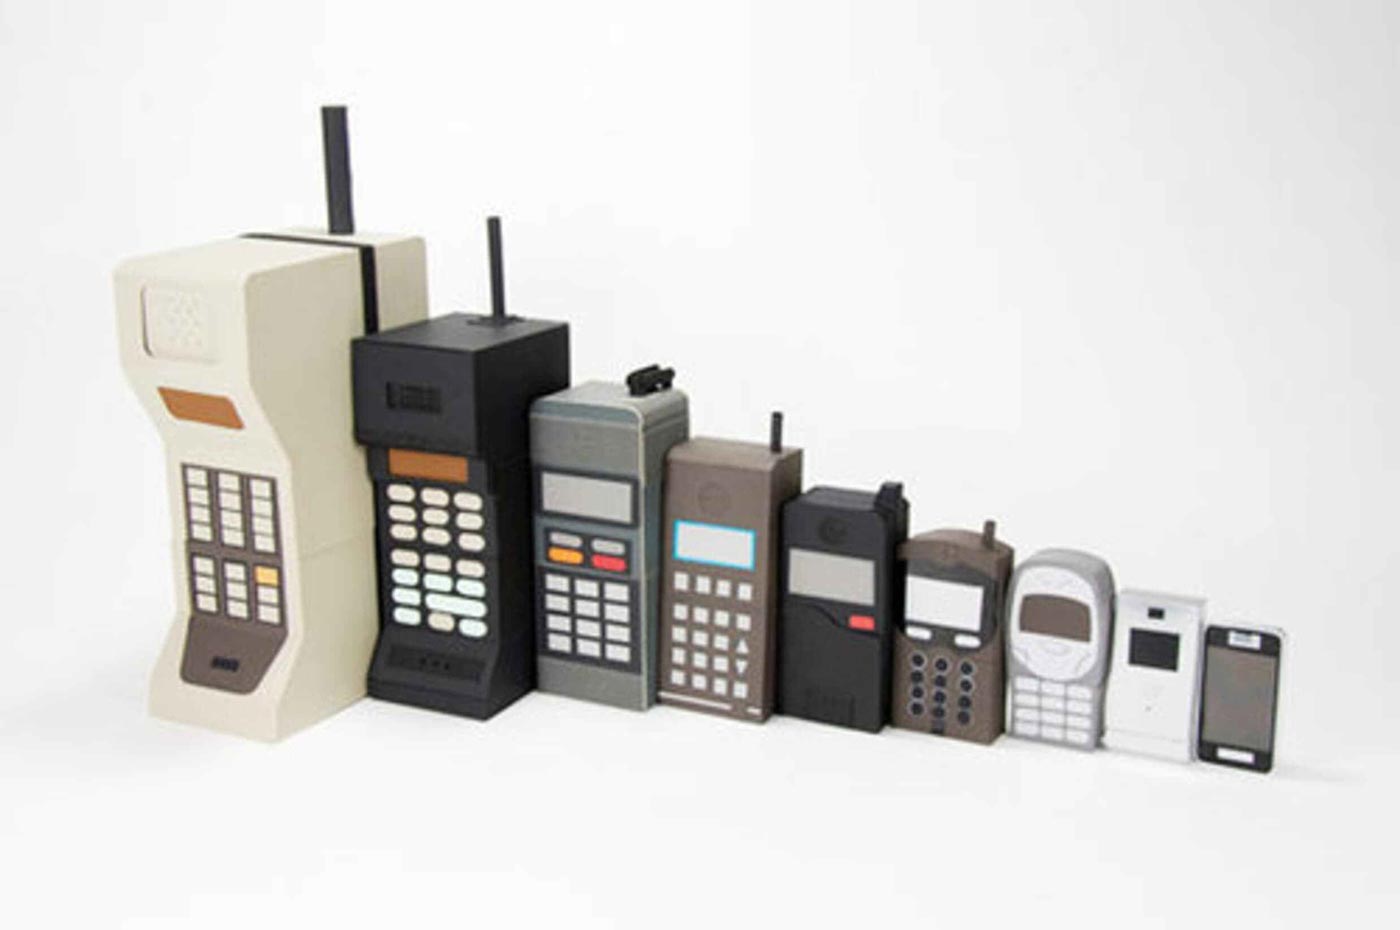 evolution of mobile phone